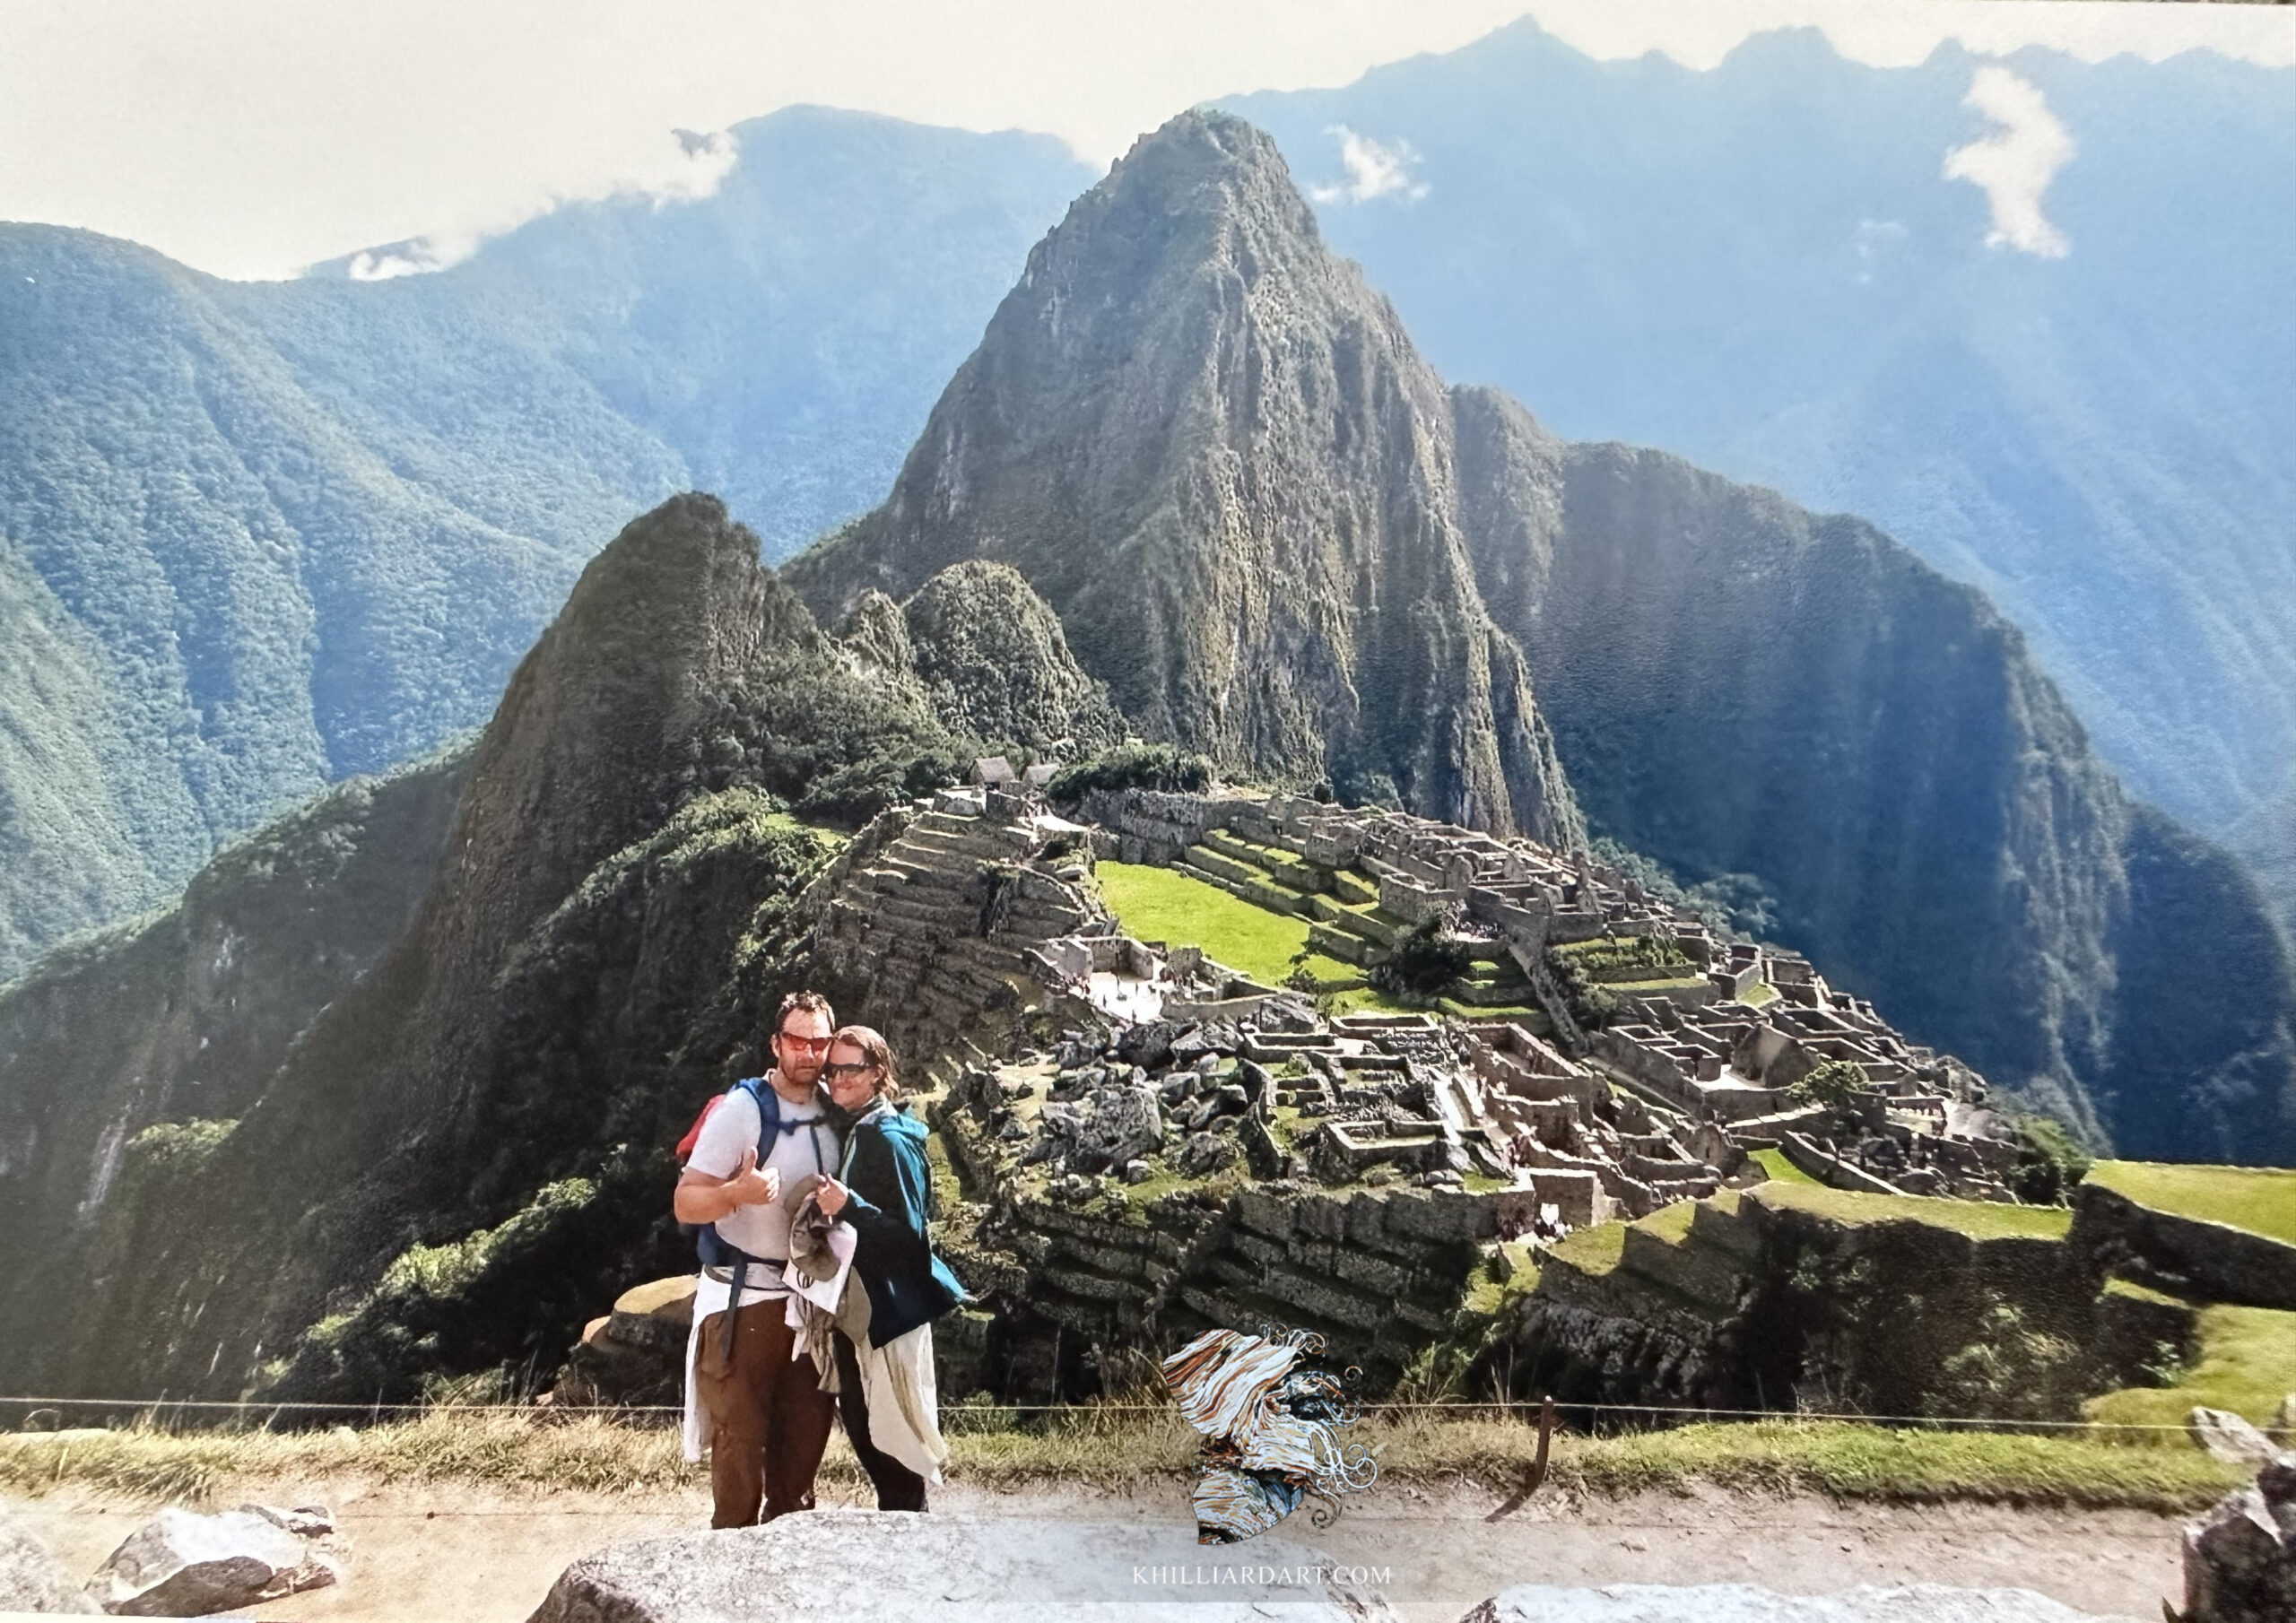 Karen Hilliard Art Blog | Machu Picchu